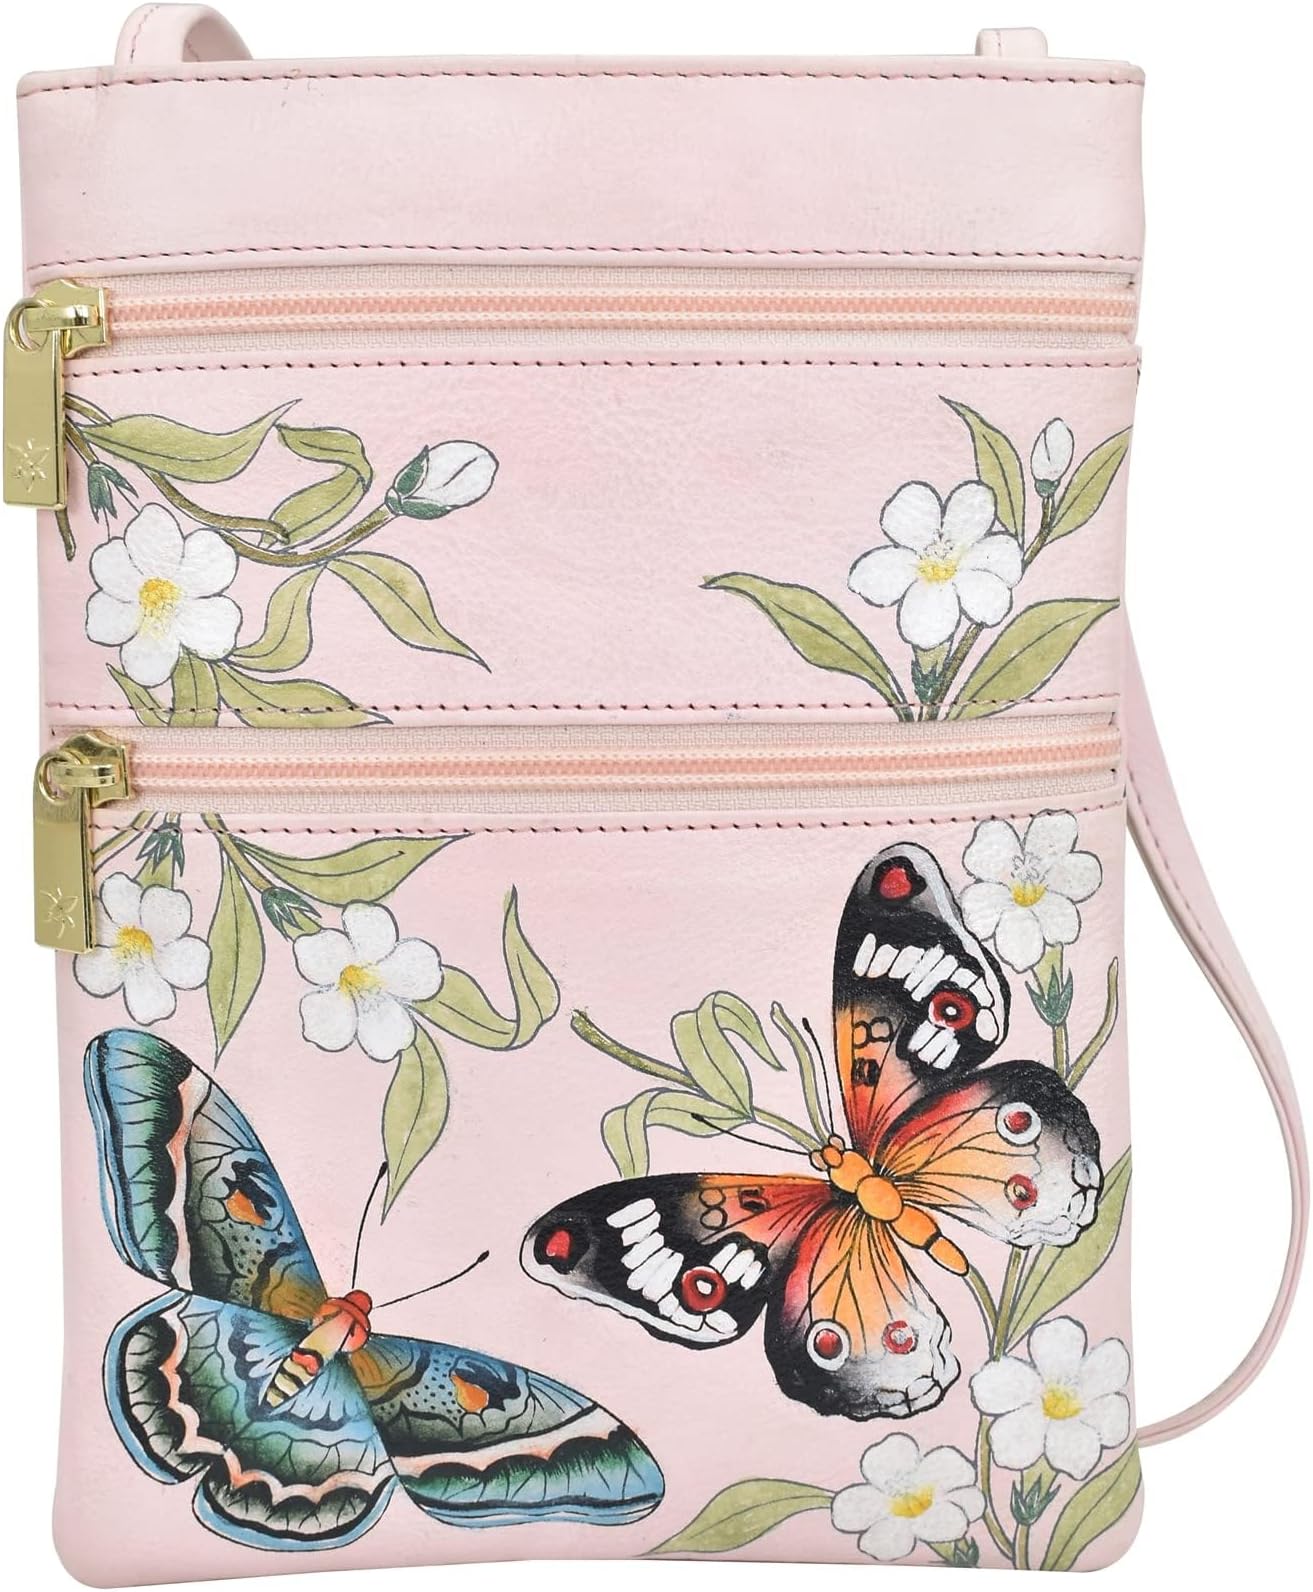 Мини-сумка через плечо с двойной молнией для путешествий 448 Anuschka, цвет Butterfly Melody цена и фото